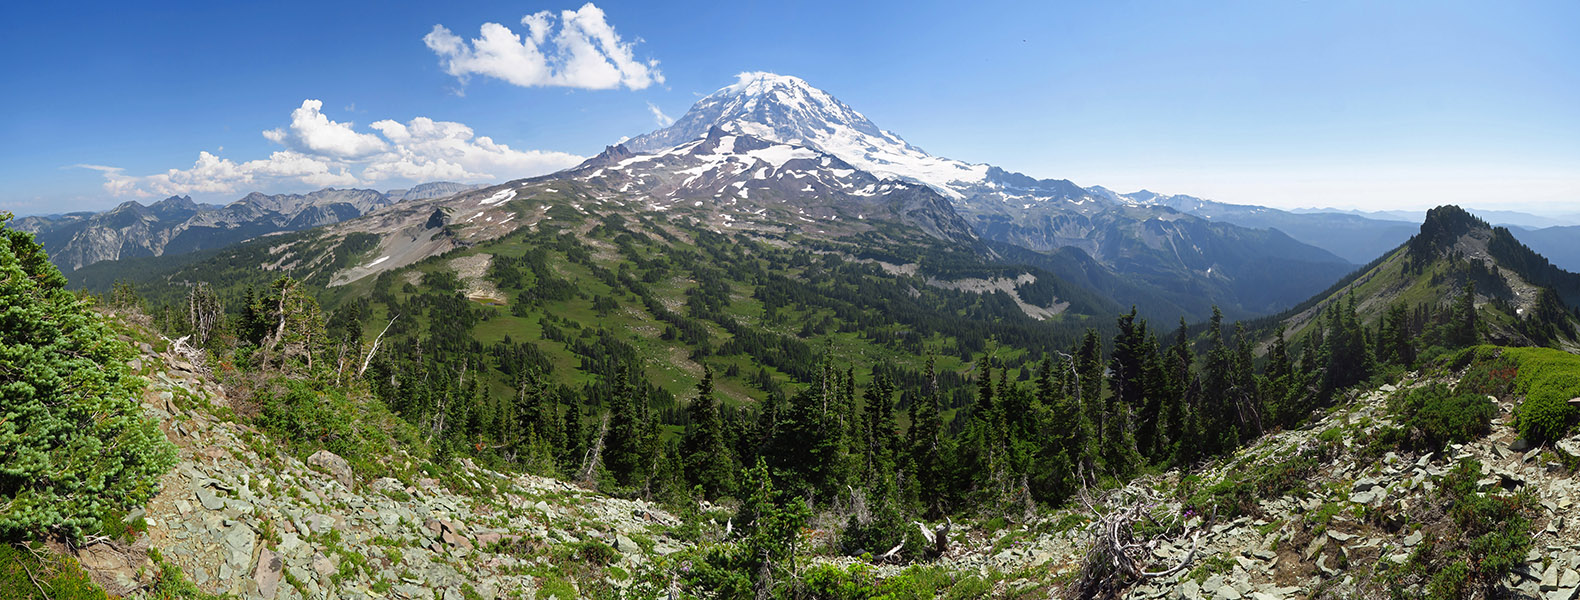 Mt. Pleasant panorama [Mt. Pleasant, Mount Rainier National Park, Pierce County, Washington]